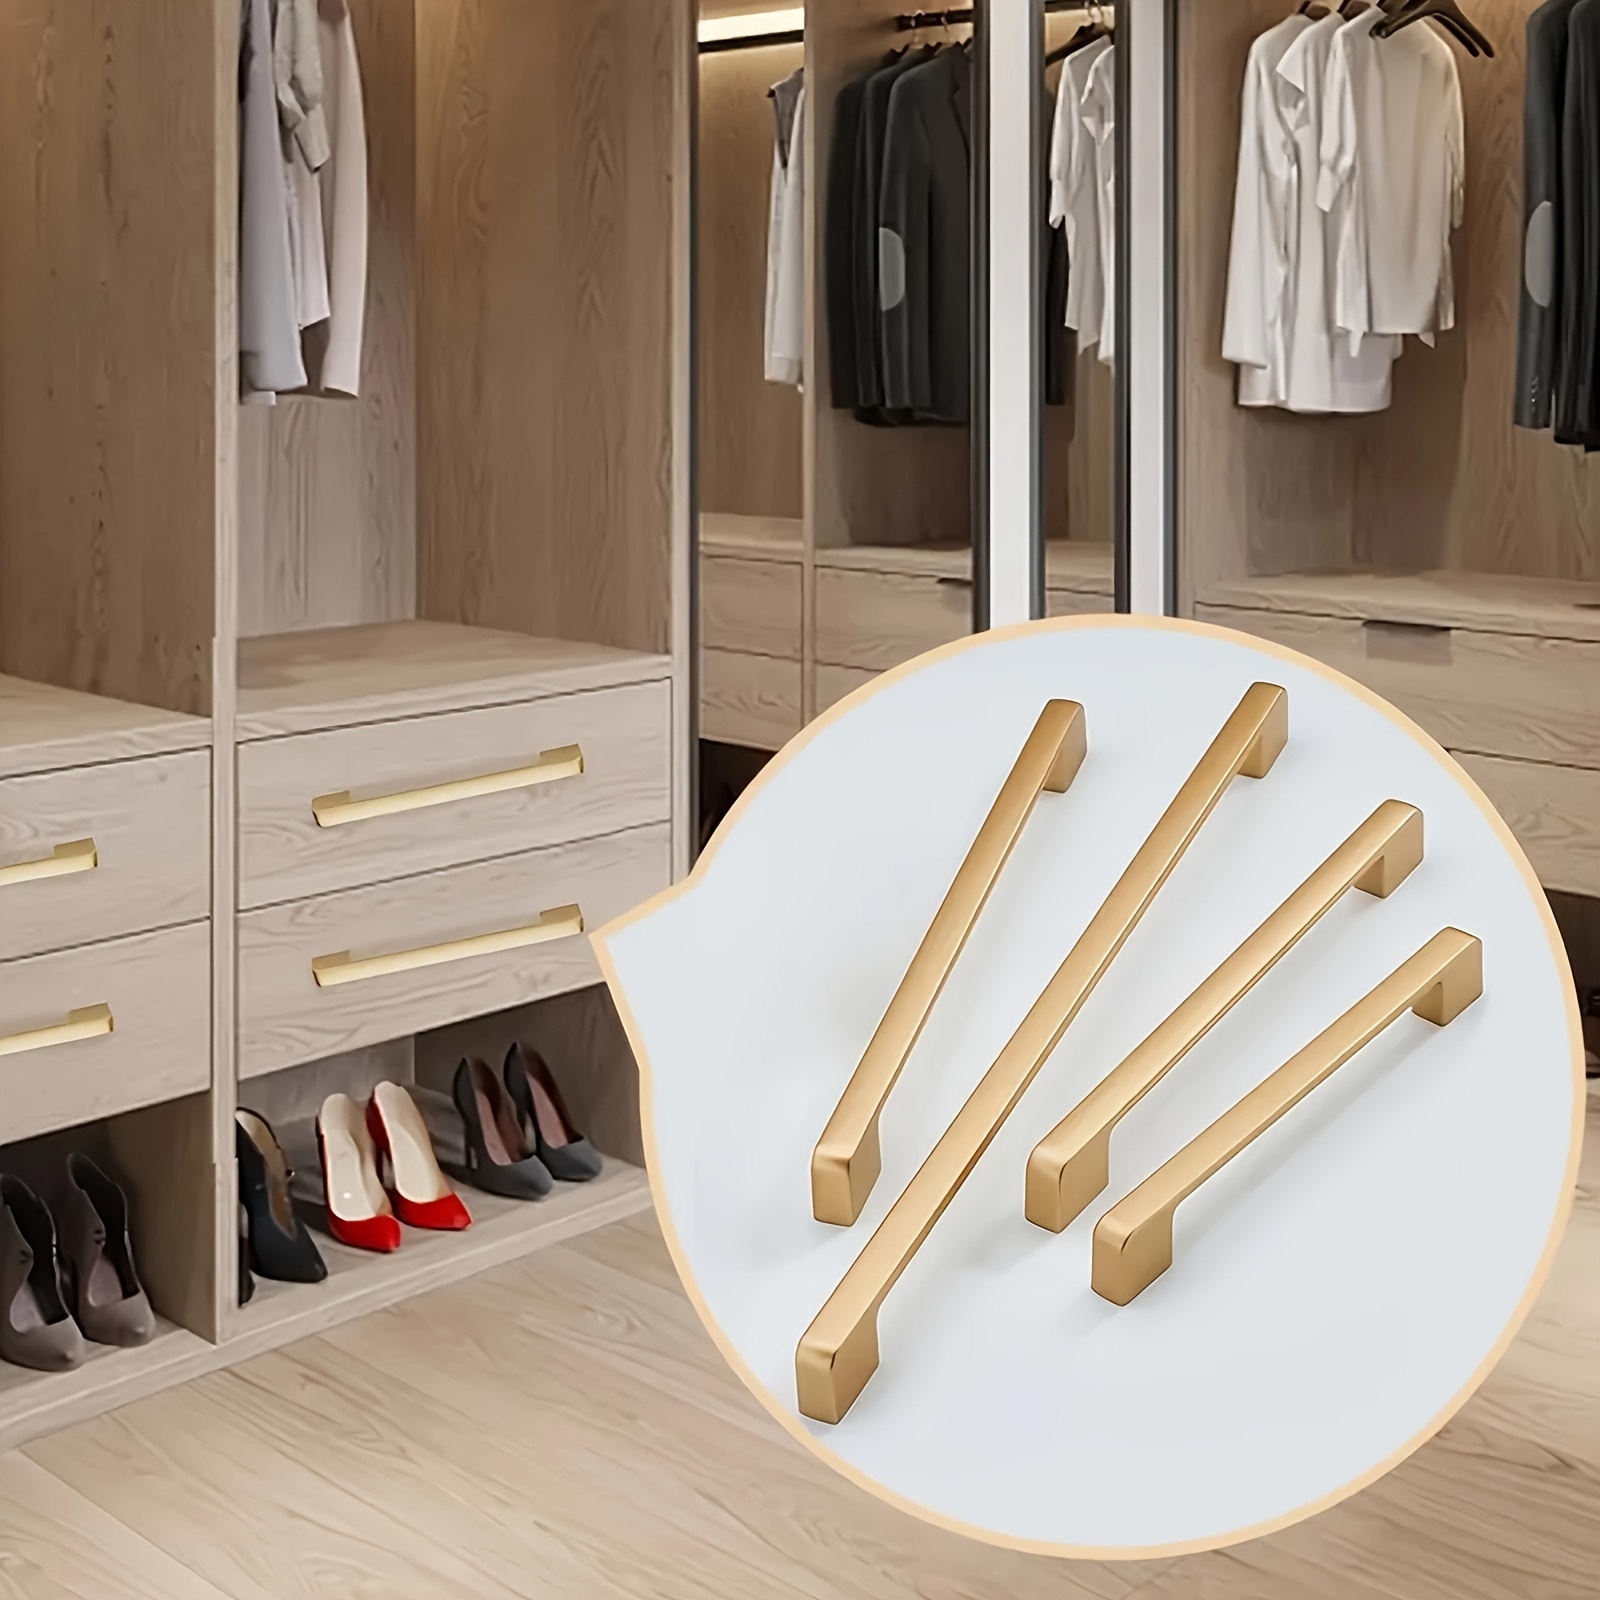 

Matte Golden Cabinet Handles 2pcs - Solid Aluminum Alloy Kitchen Cupboard Pulls, Drawer Knobs With Screws, Polished Metal Furniture Hardware For Dresser & Cabinets